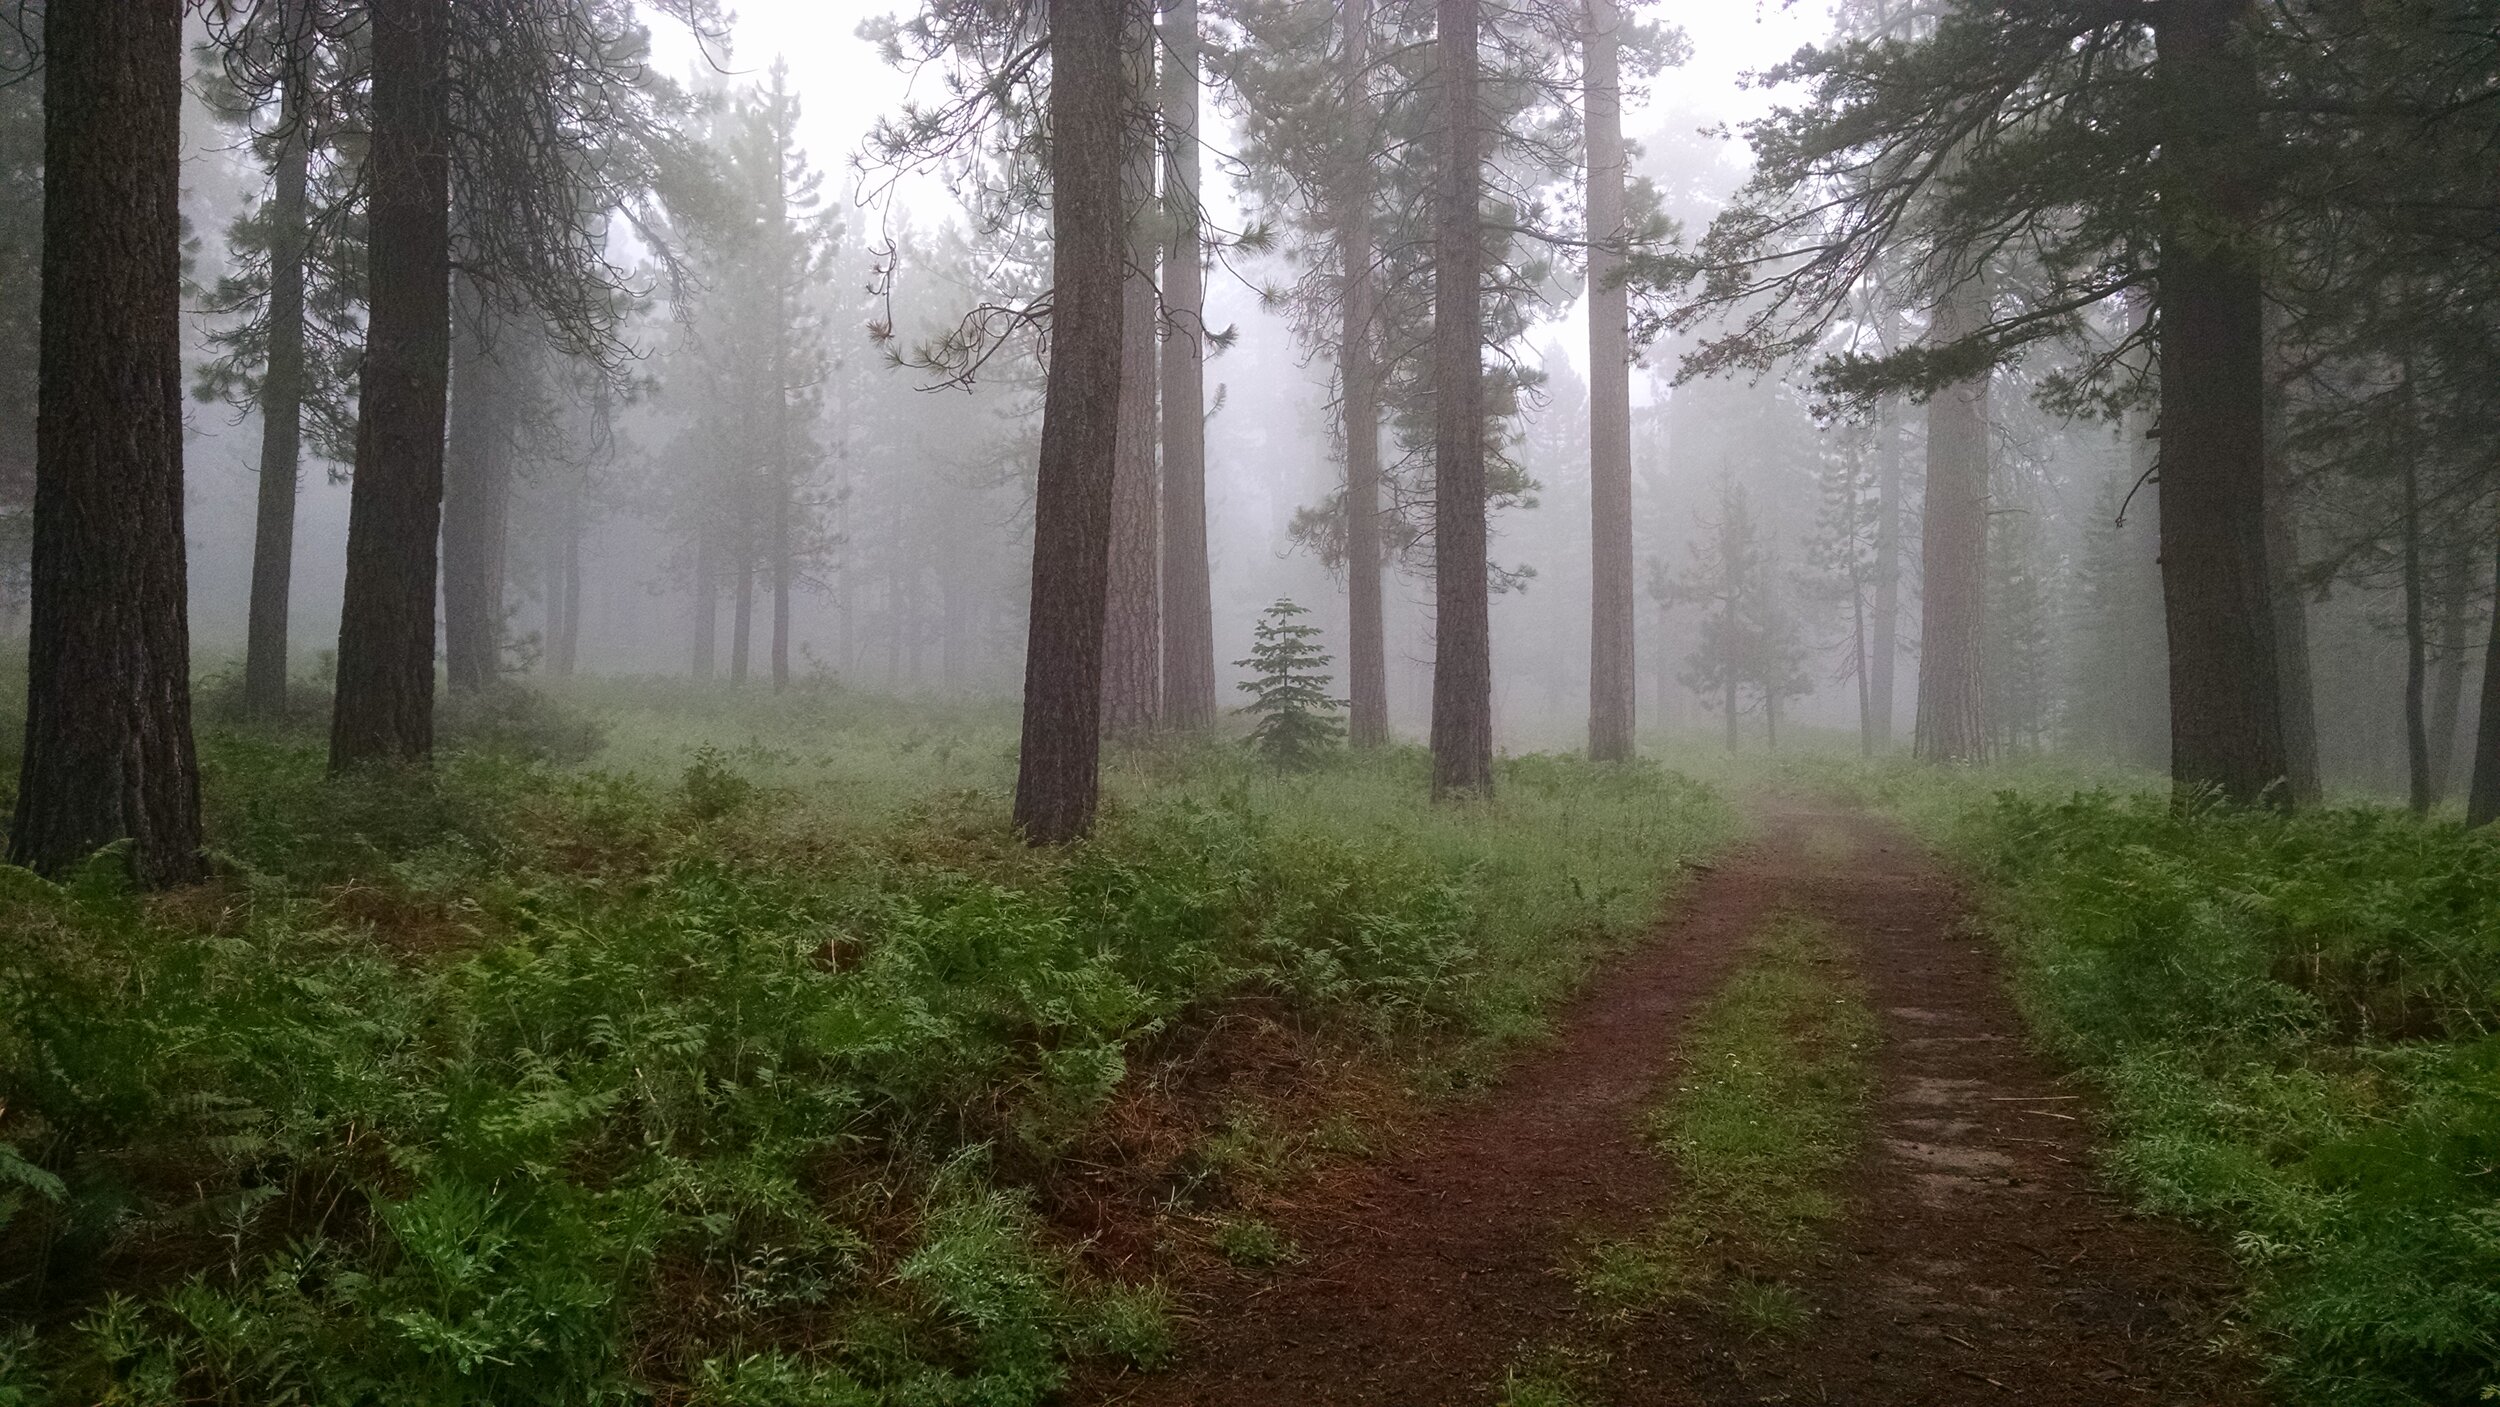 A foggy trail through the forest